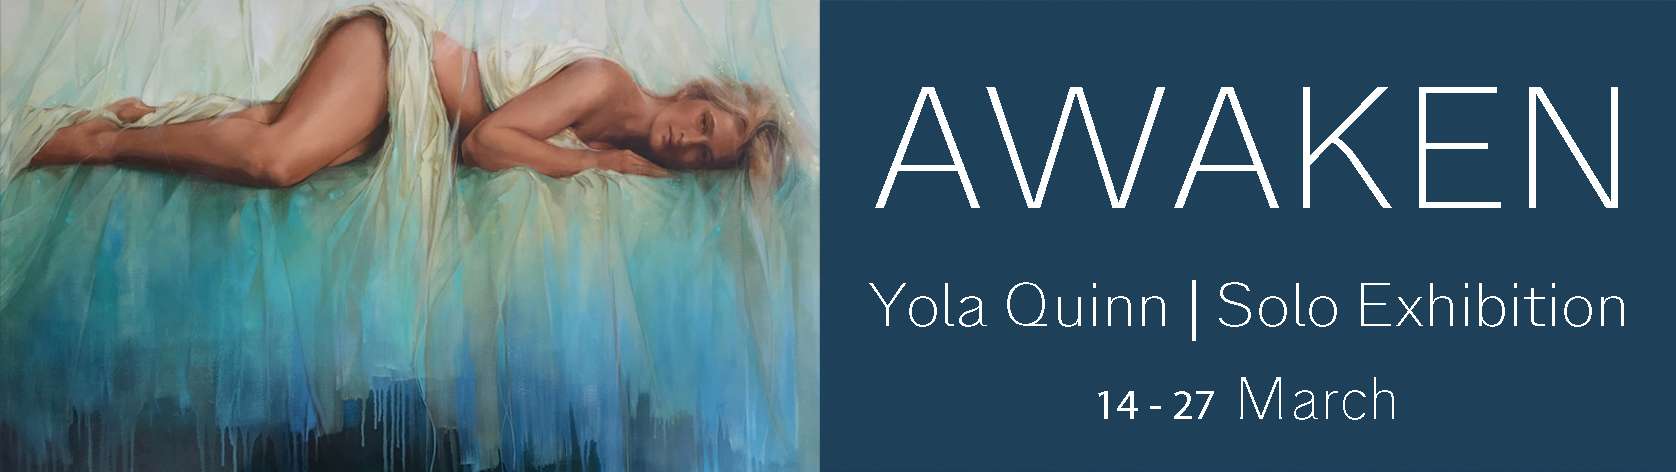 The Studio Art Gallery - Exhibition Header - Awaken - Yola Quinn